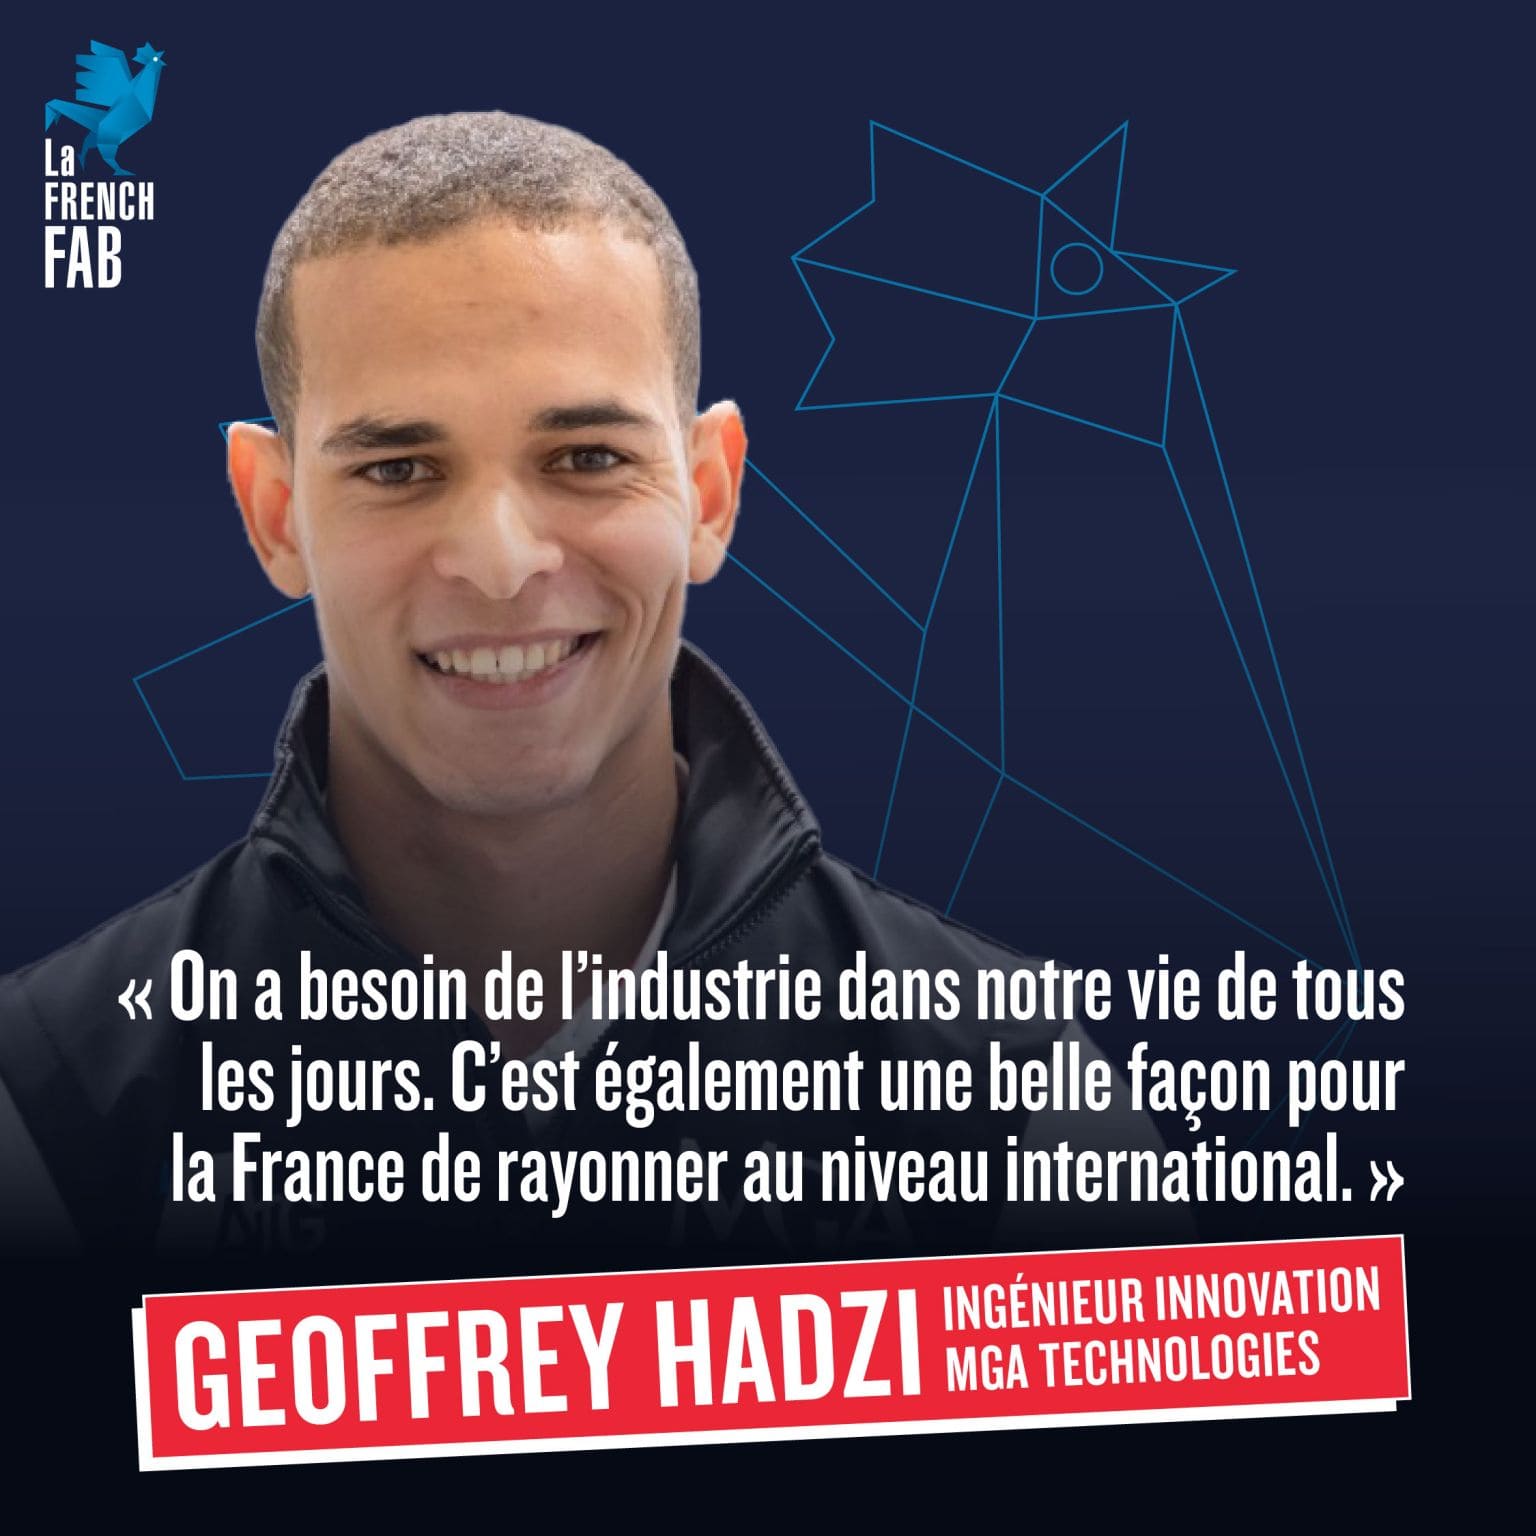 Interview de Geoffrey Hadzi, ingénieur innovation chez MGA Technologies par La French Fab